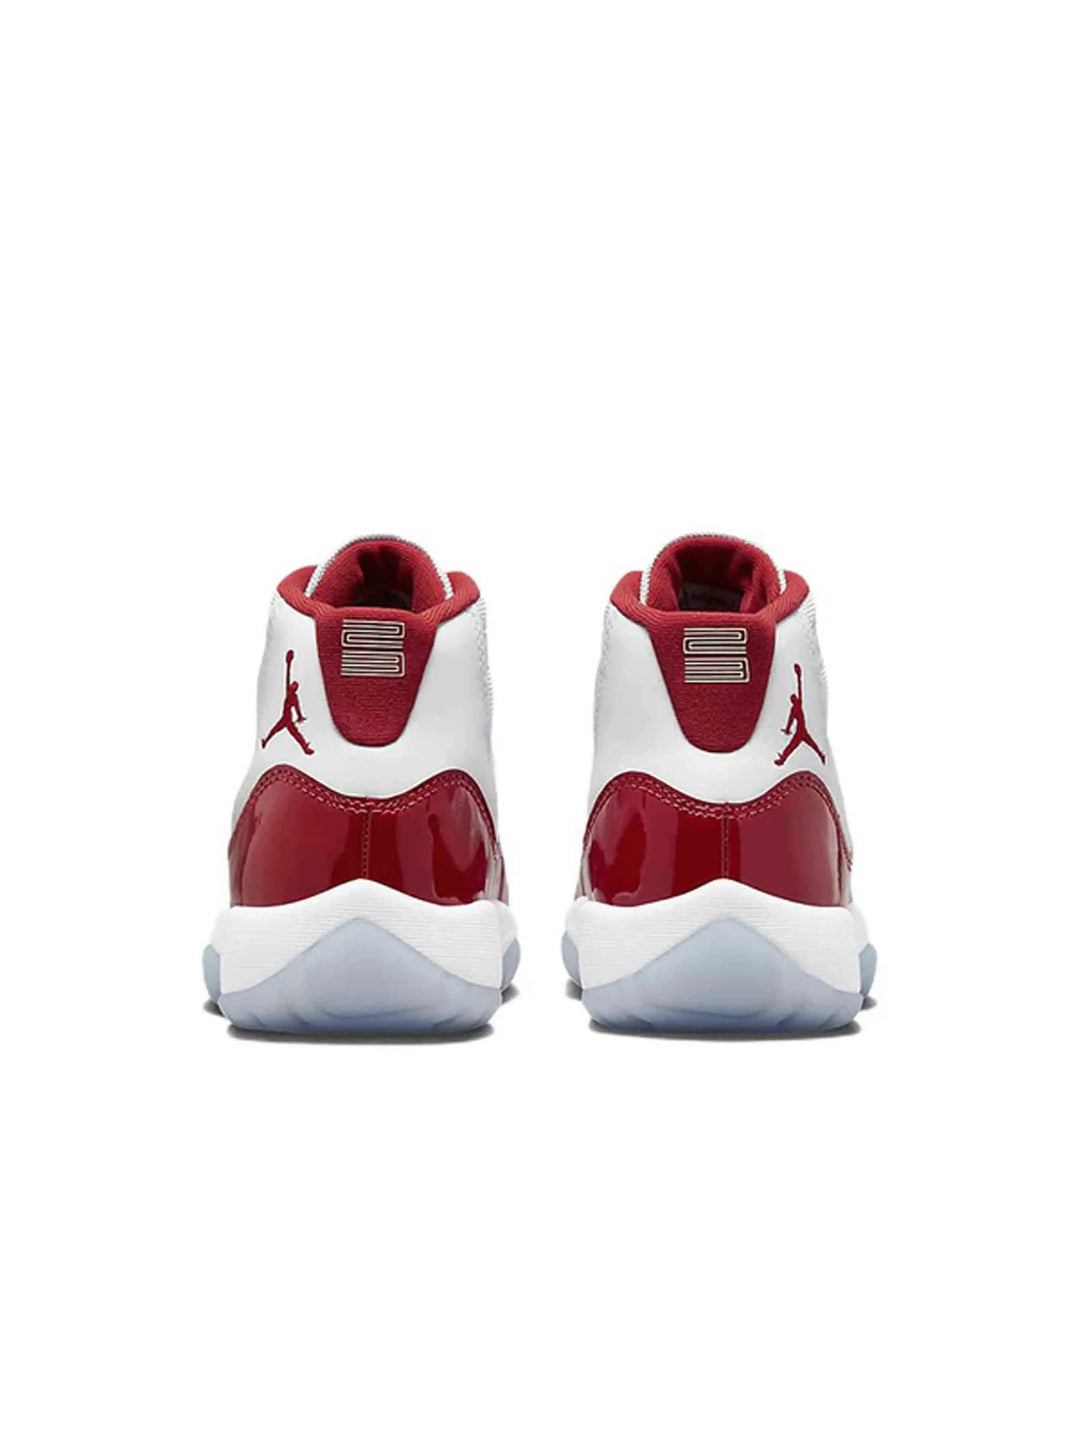 Nike Air Jordan 11 Retro Cherry (2022) (GS) - Prior